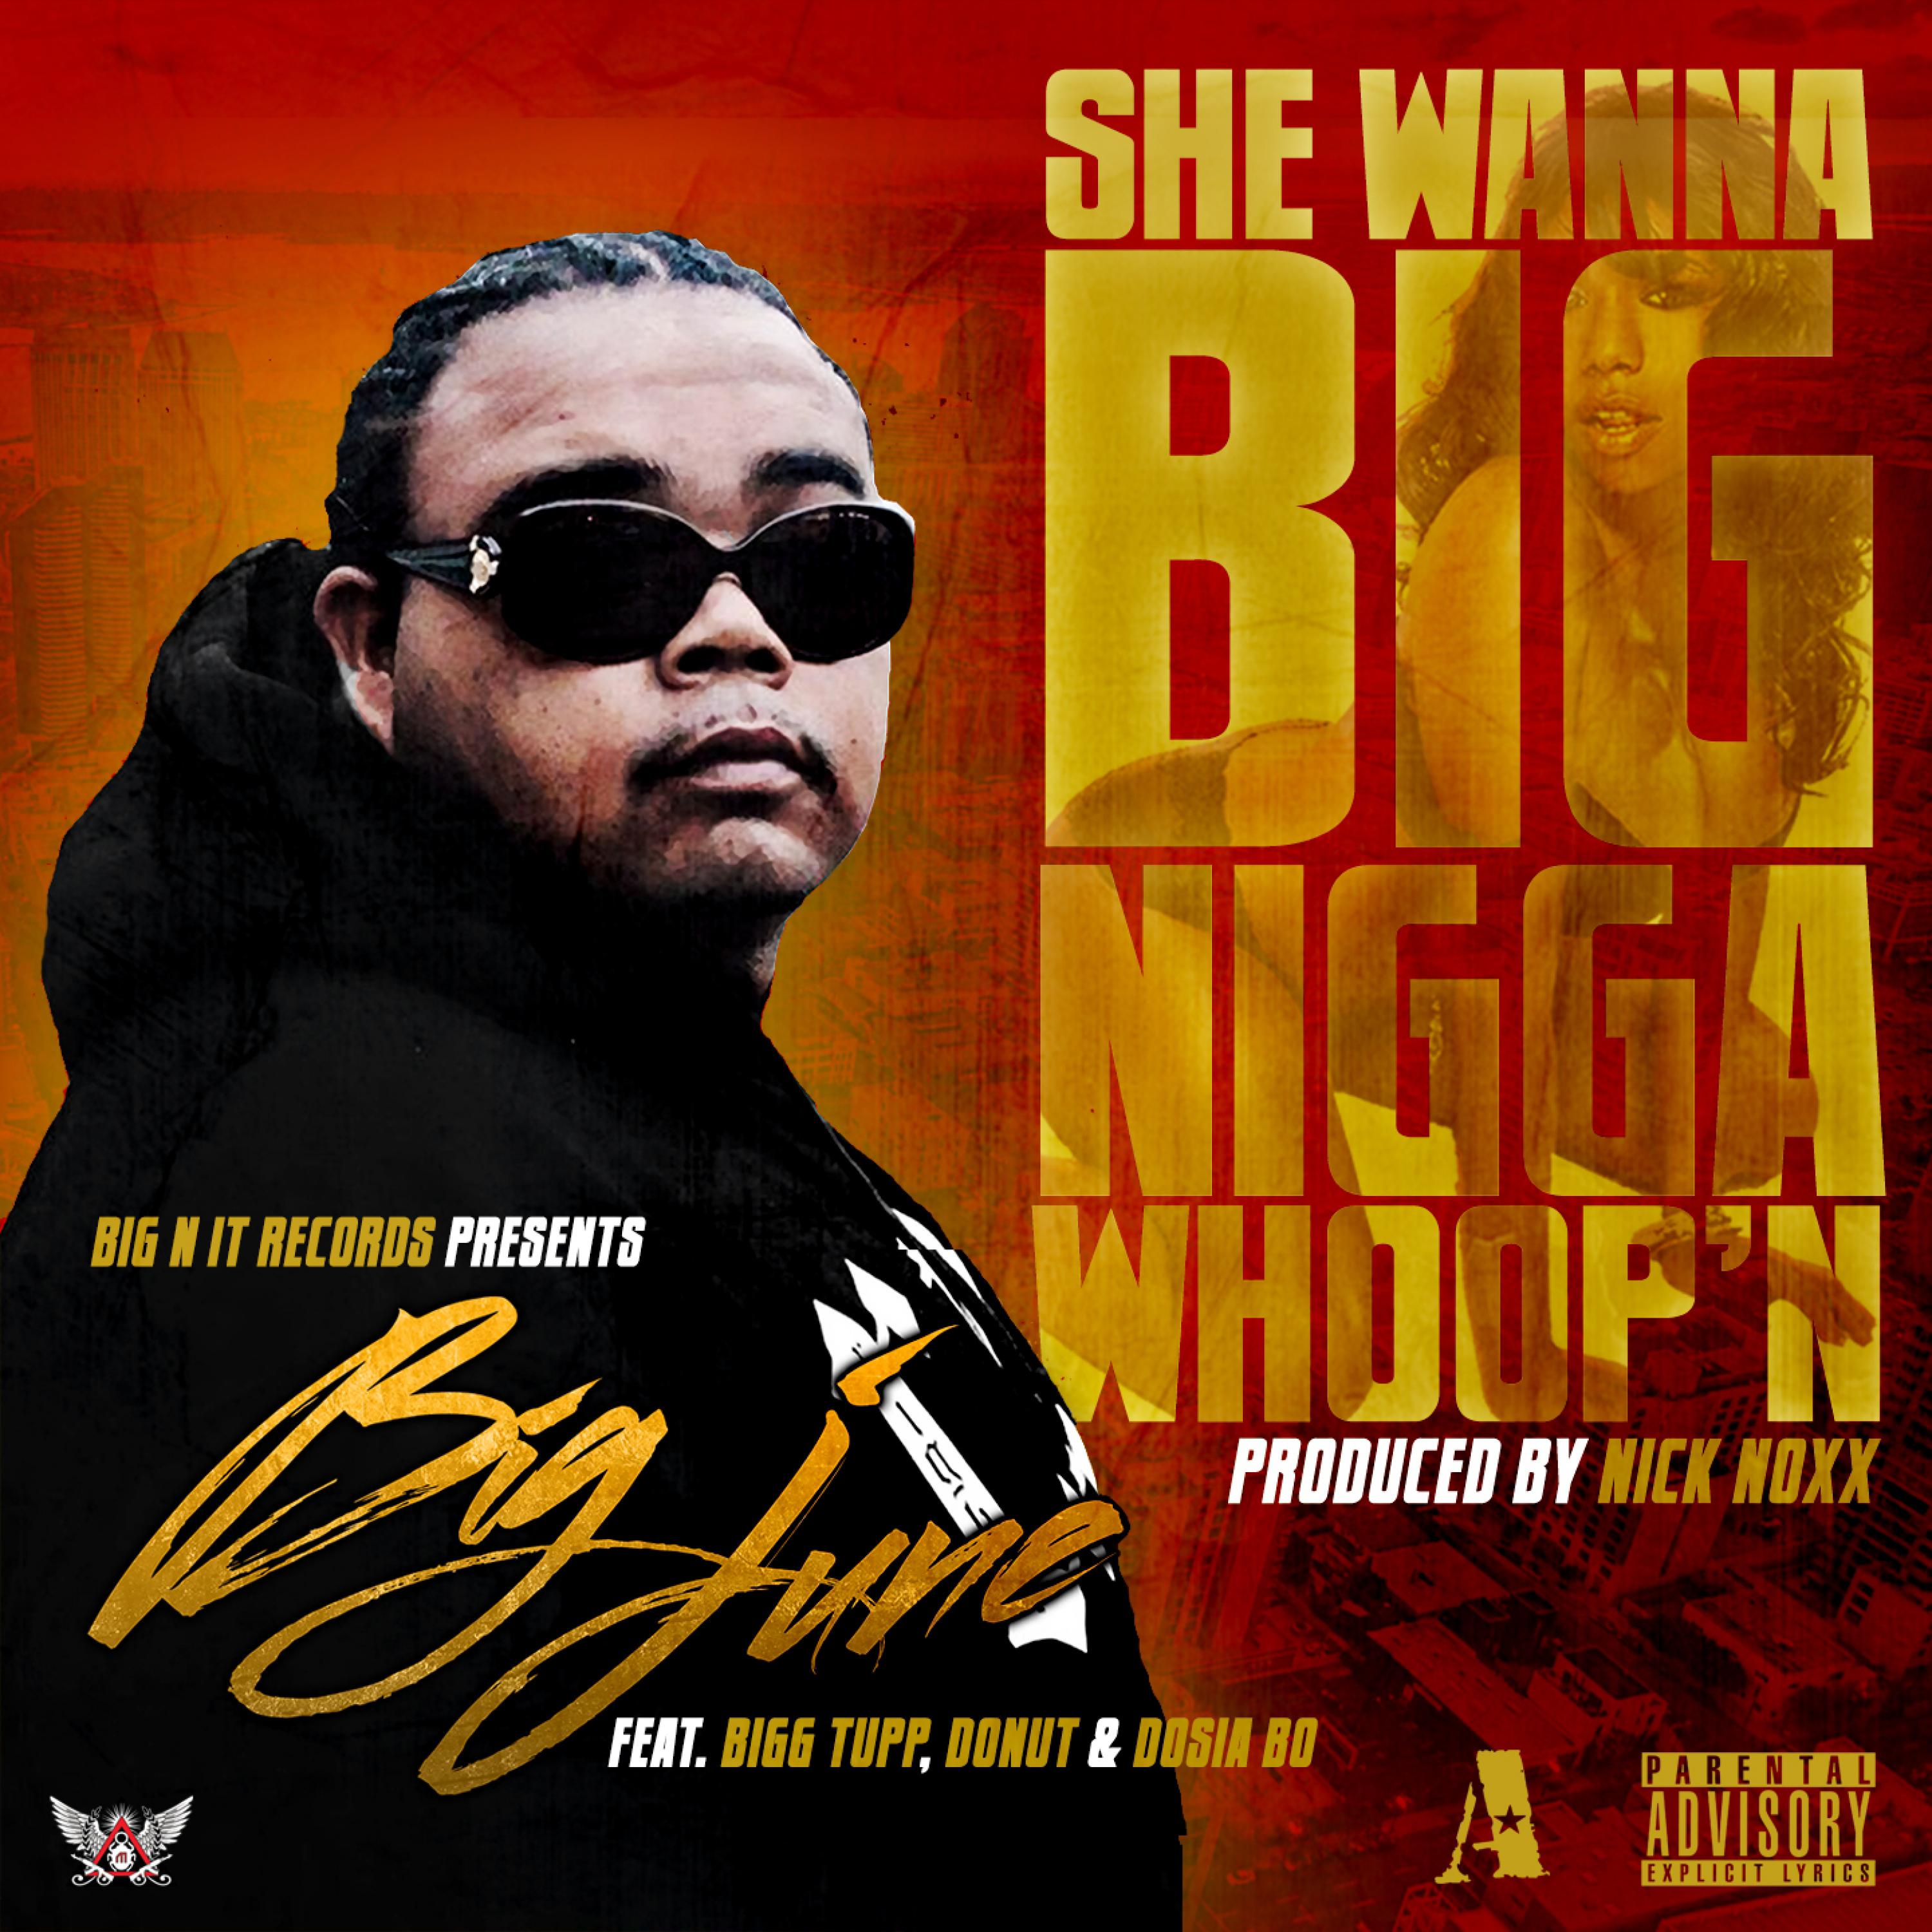 She Wanna Big ***** Whoop'n (feat. Bigg Tupp, Donut & Dosia Bo) - Single